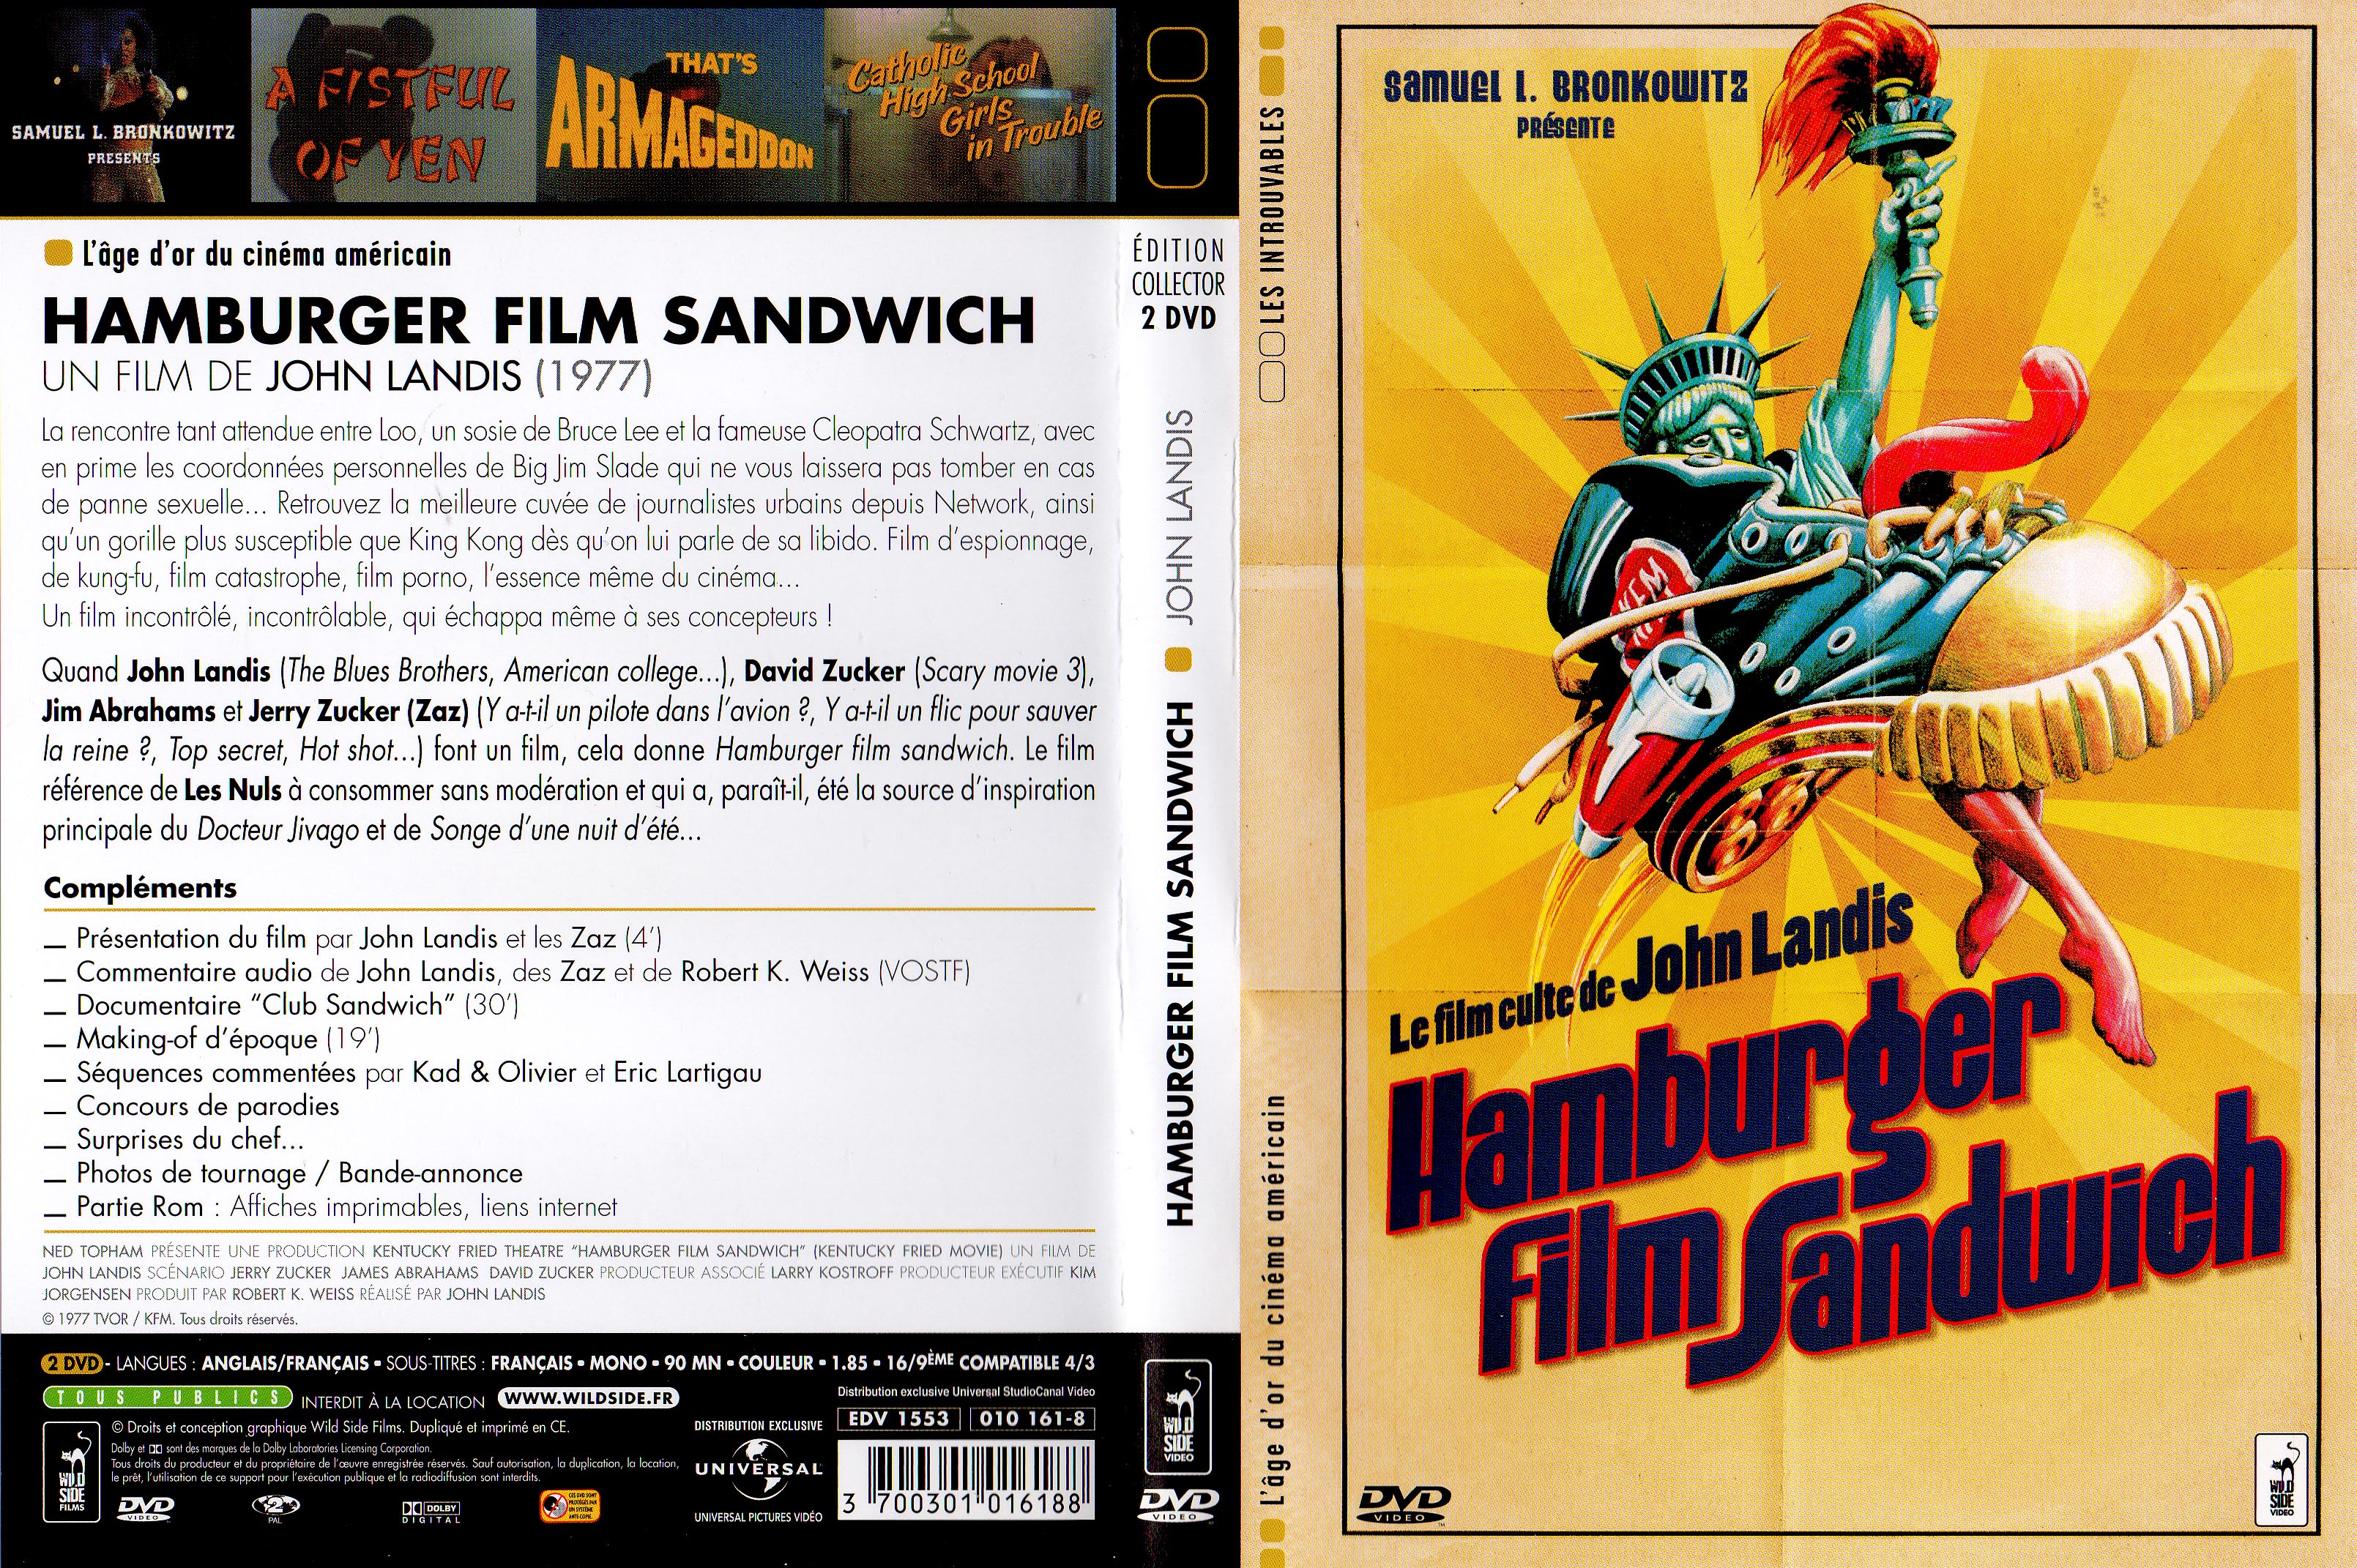 Jaquette DVD Hamburger film sandwich v2